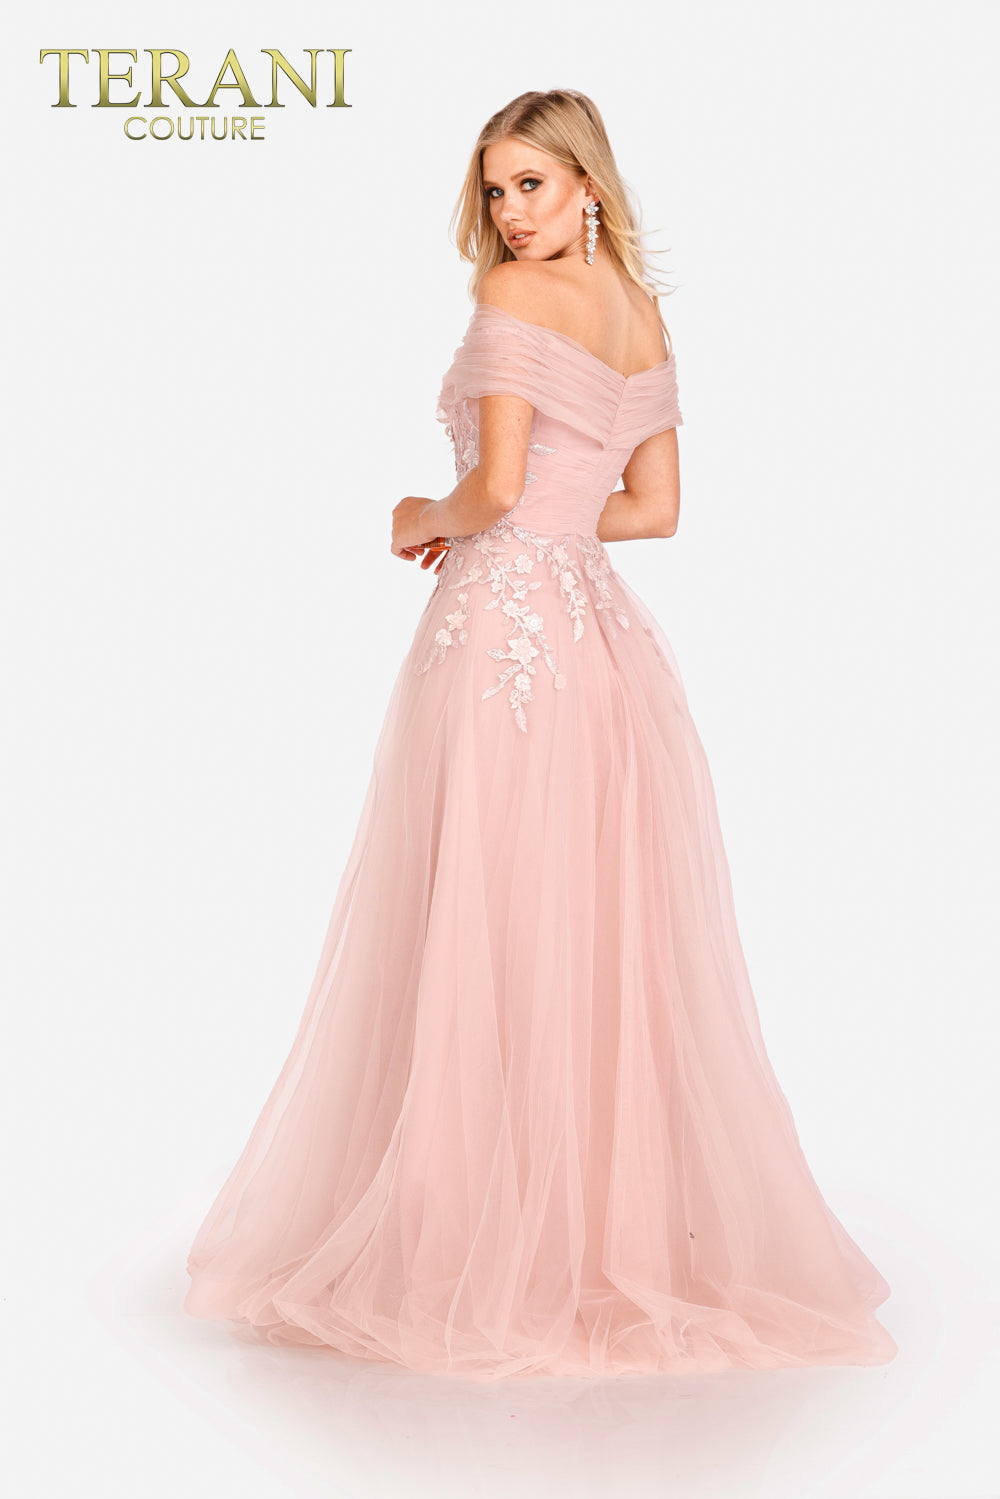 Terani Couture 231M0481 Dress